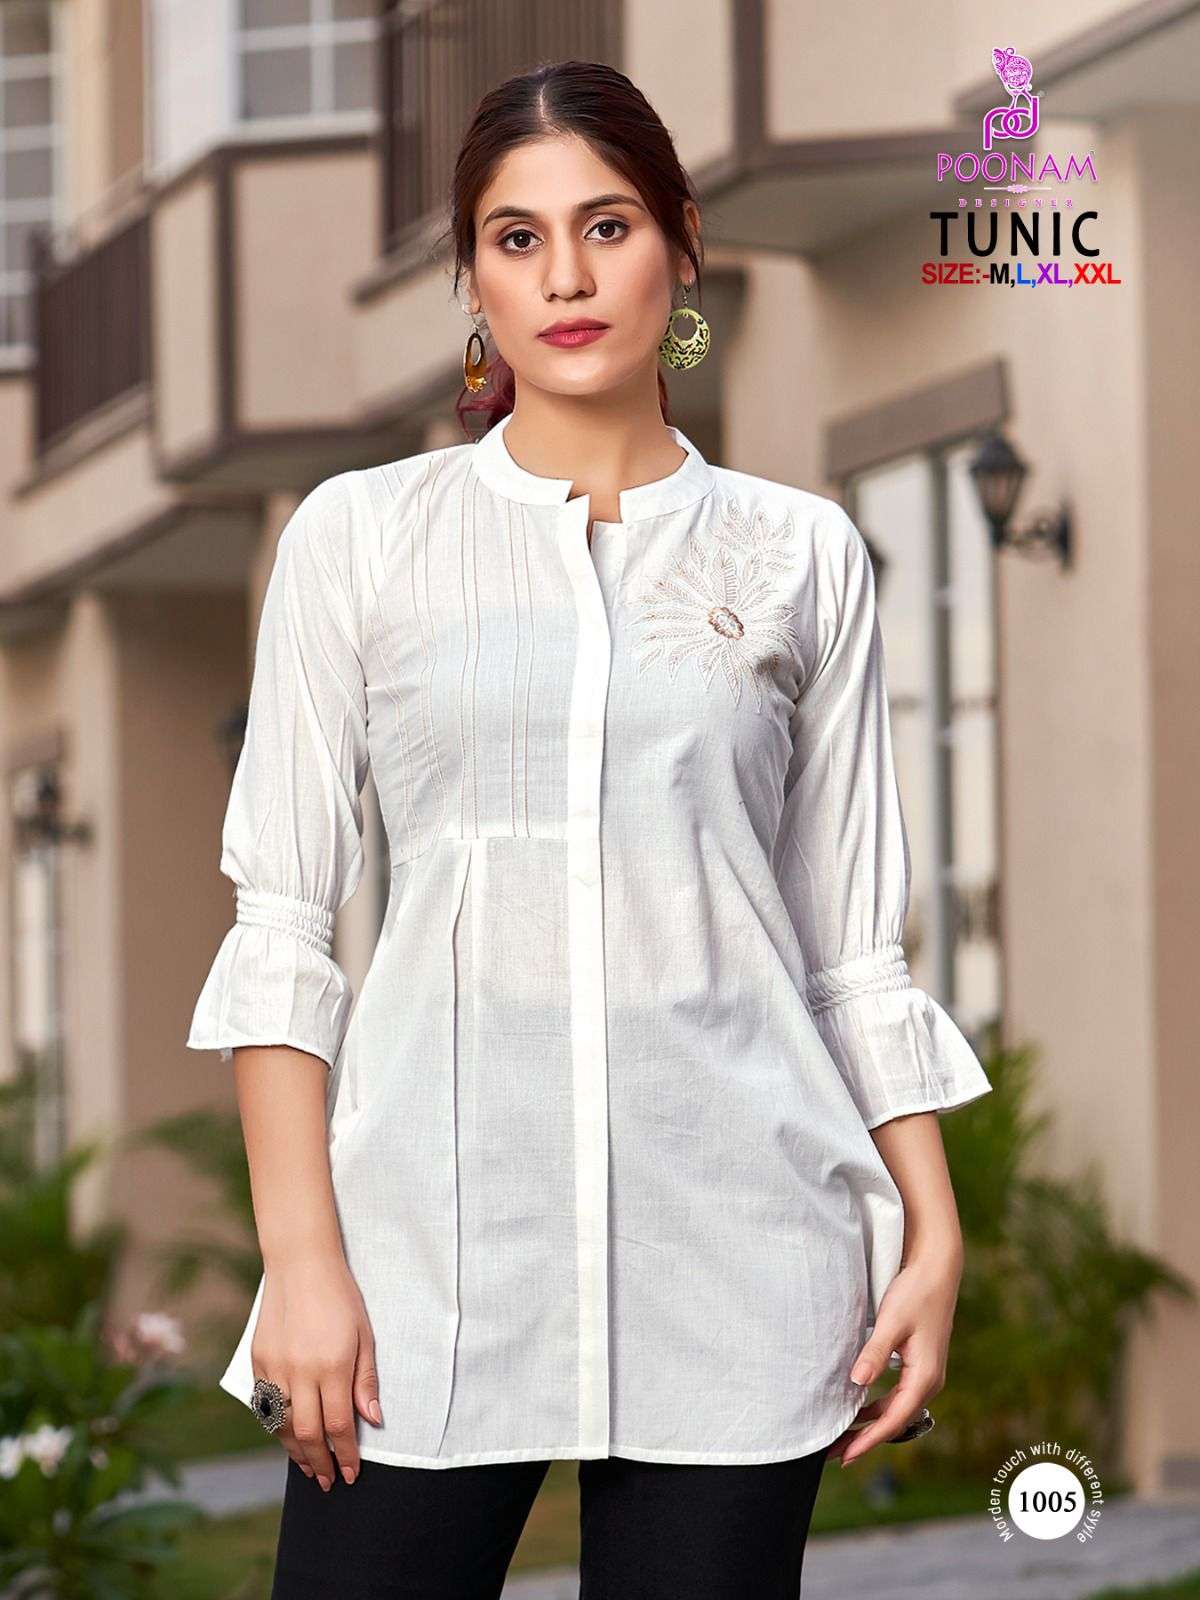 poonam designer tunic 1001-1006 series designer office wear kurti wholesaler surat gujarat